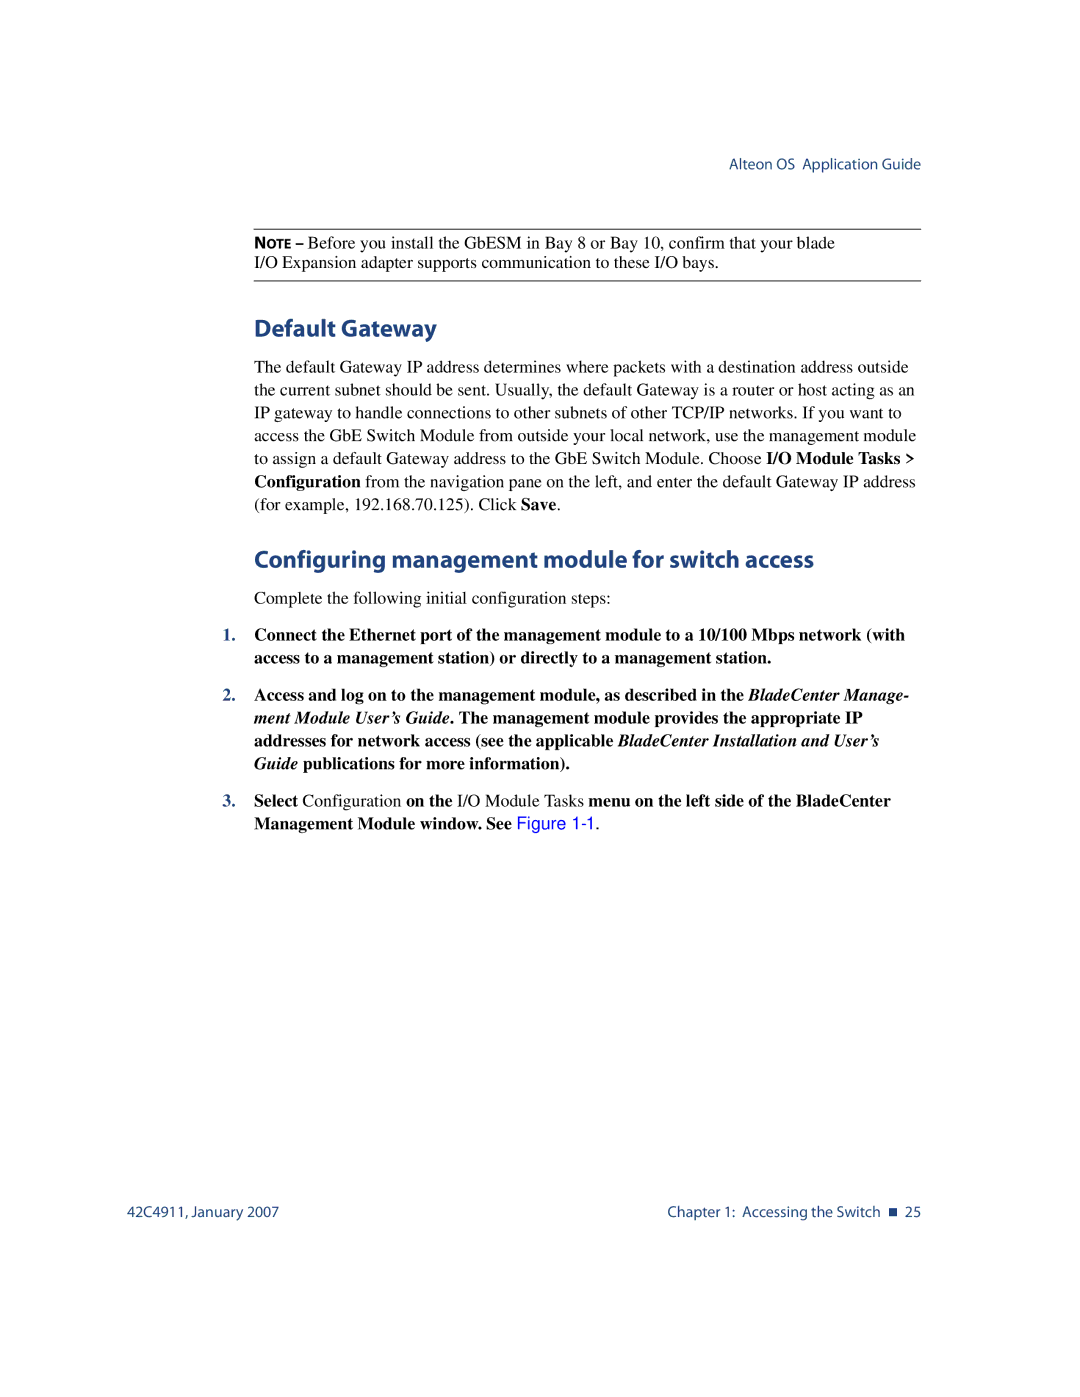 Nortel Networks 42C4911 manual Default Gateway, Configuring management module for switch access 